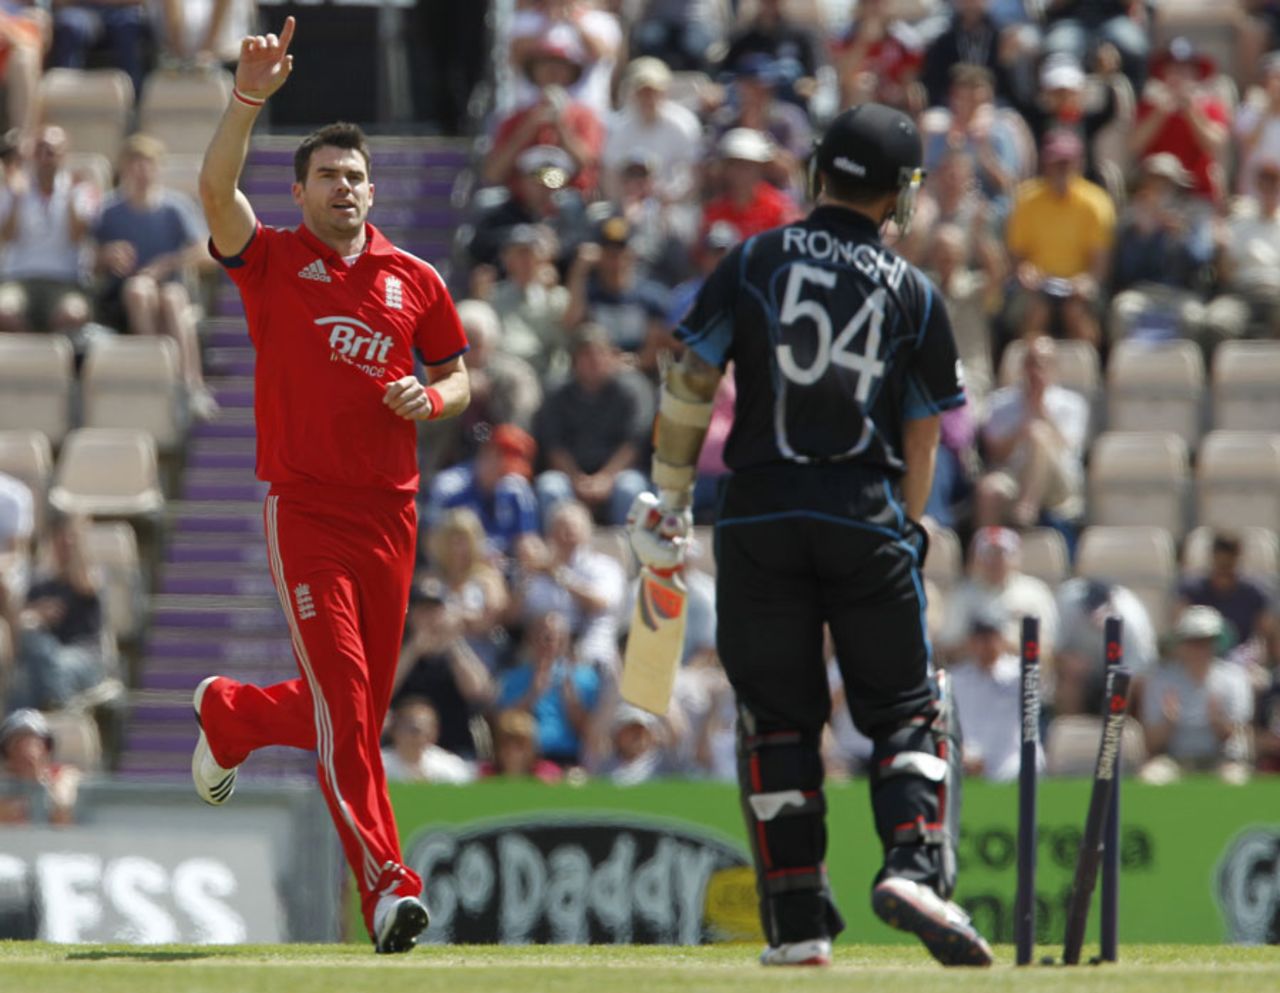 James Anderson dismisses Luke Ronchi, England v New Zealand, 2nd ODI, Ageas Bowl, June 2, 2013